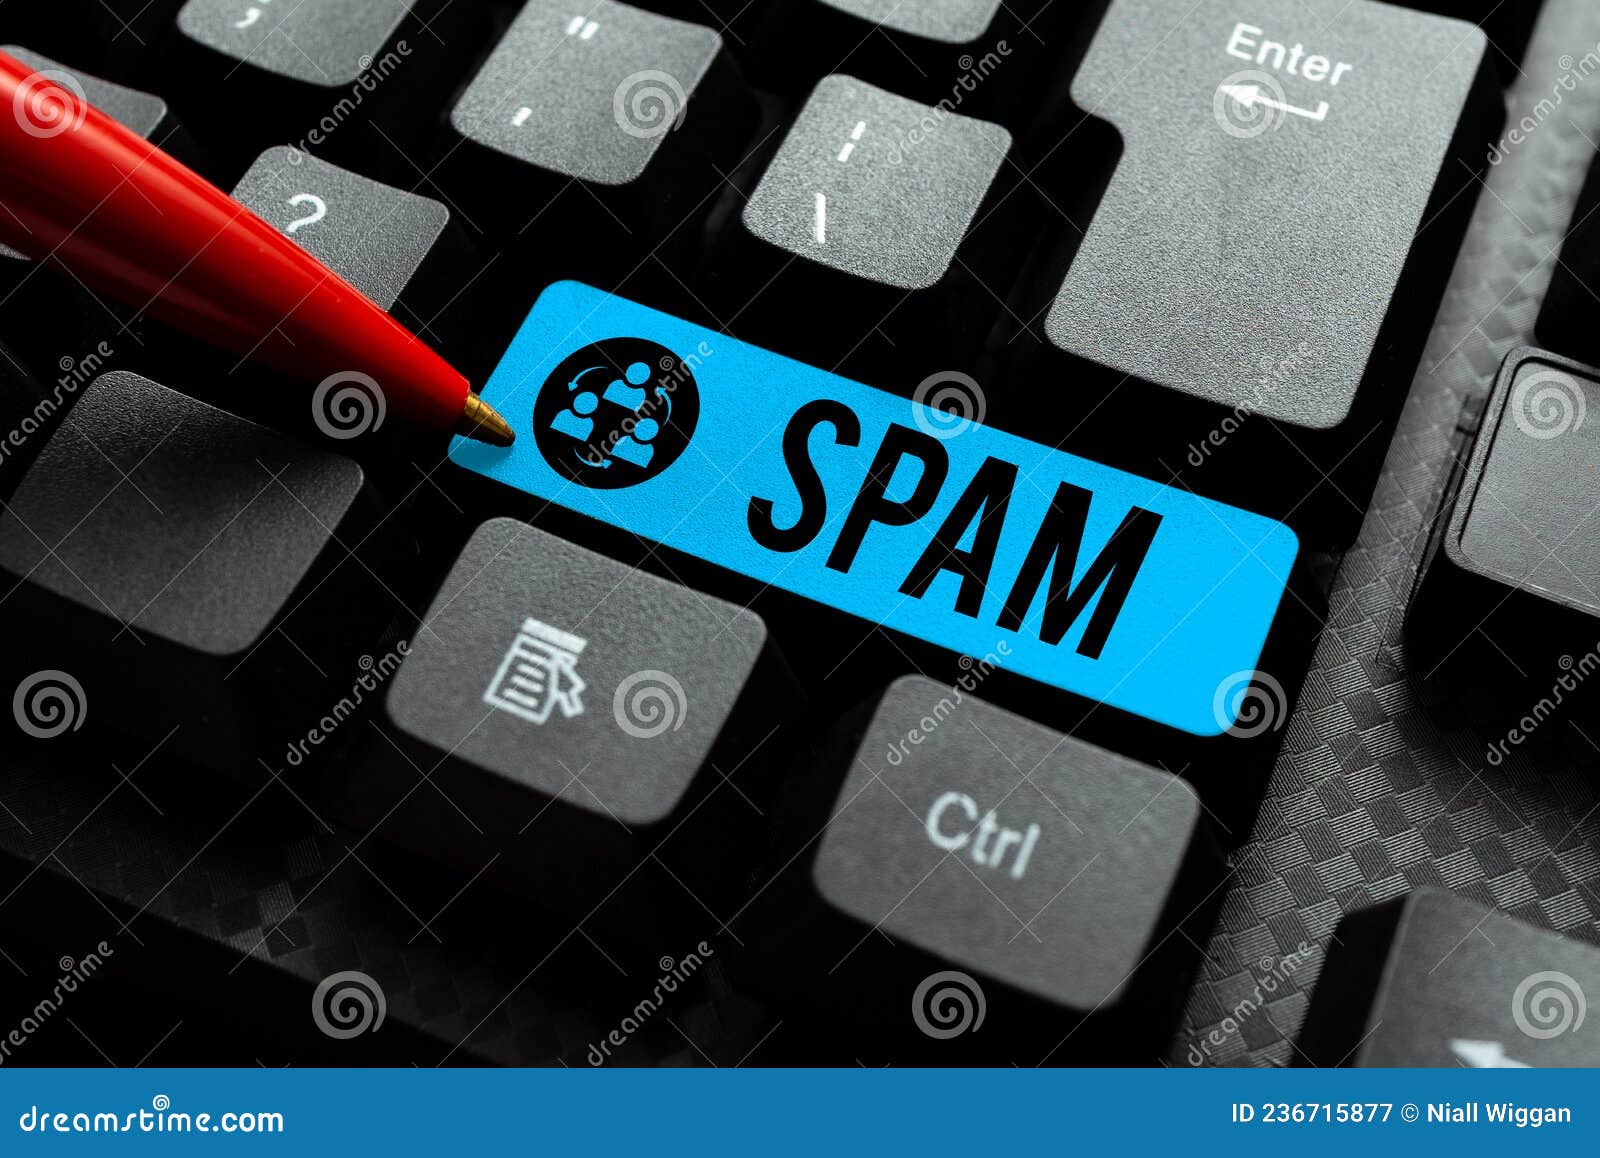 internet spam ads